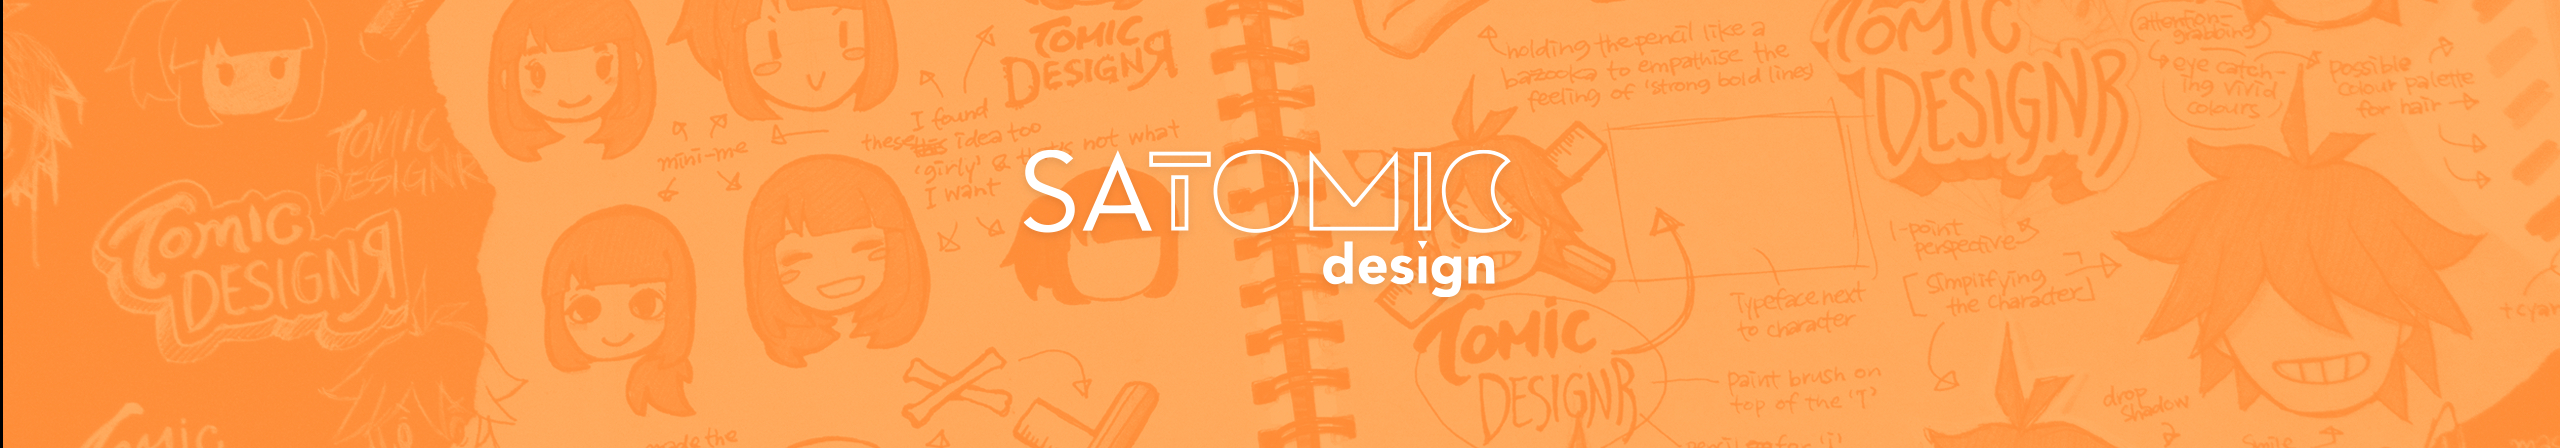 Tomié | Satomic Design's profile banner